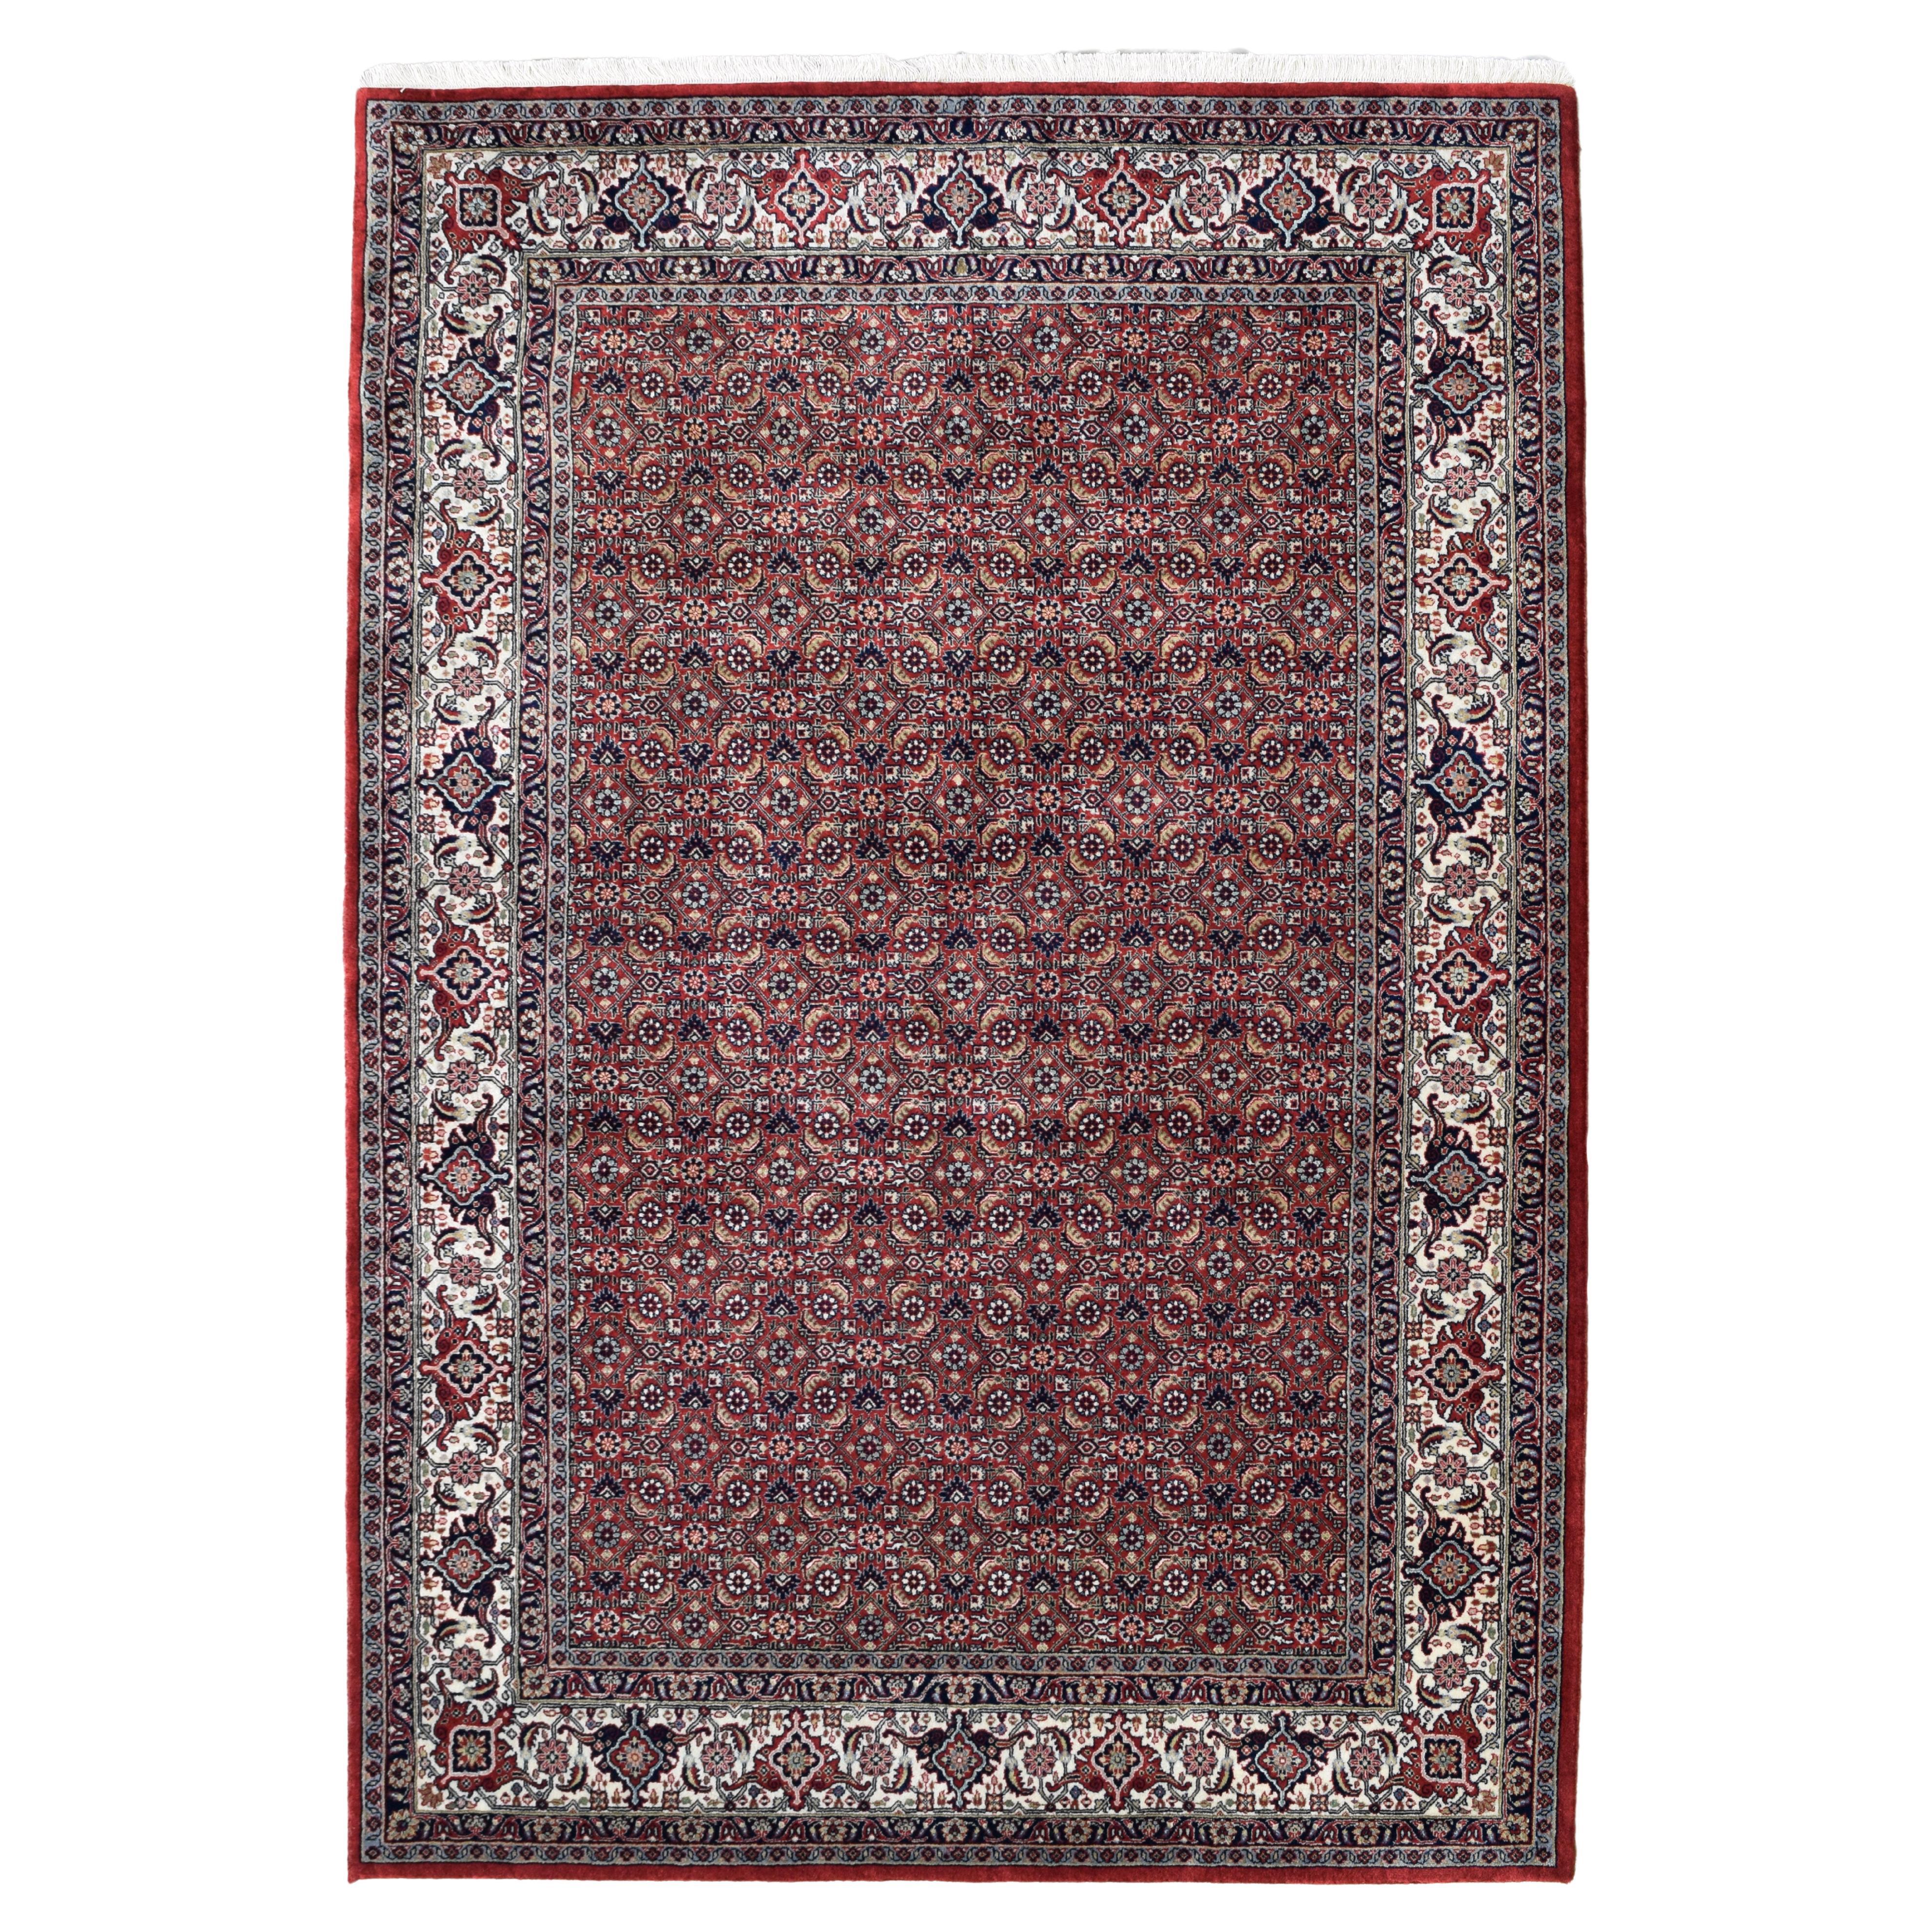 Classic Hand-Knotted Bidjar Carpet in Red, Indigo, and Cream Wool